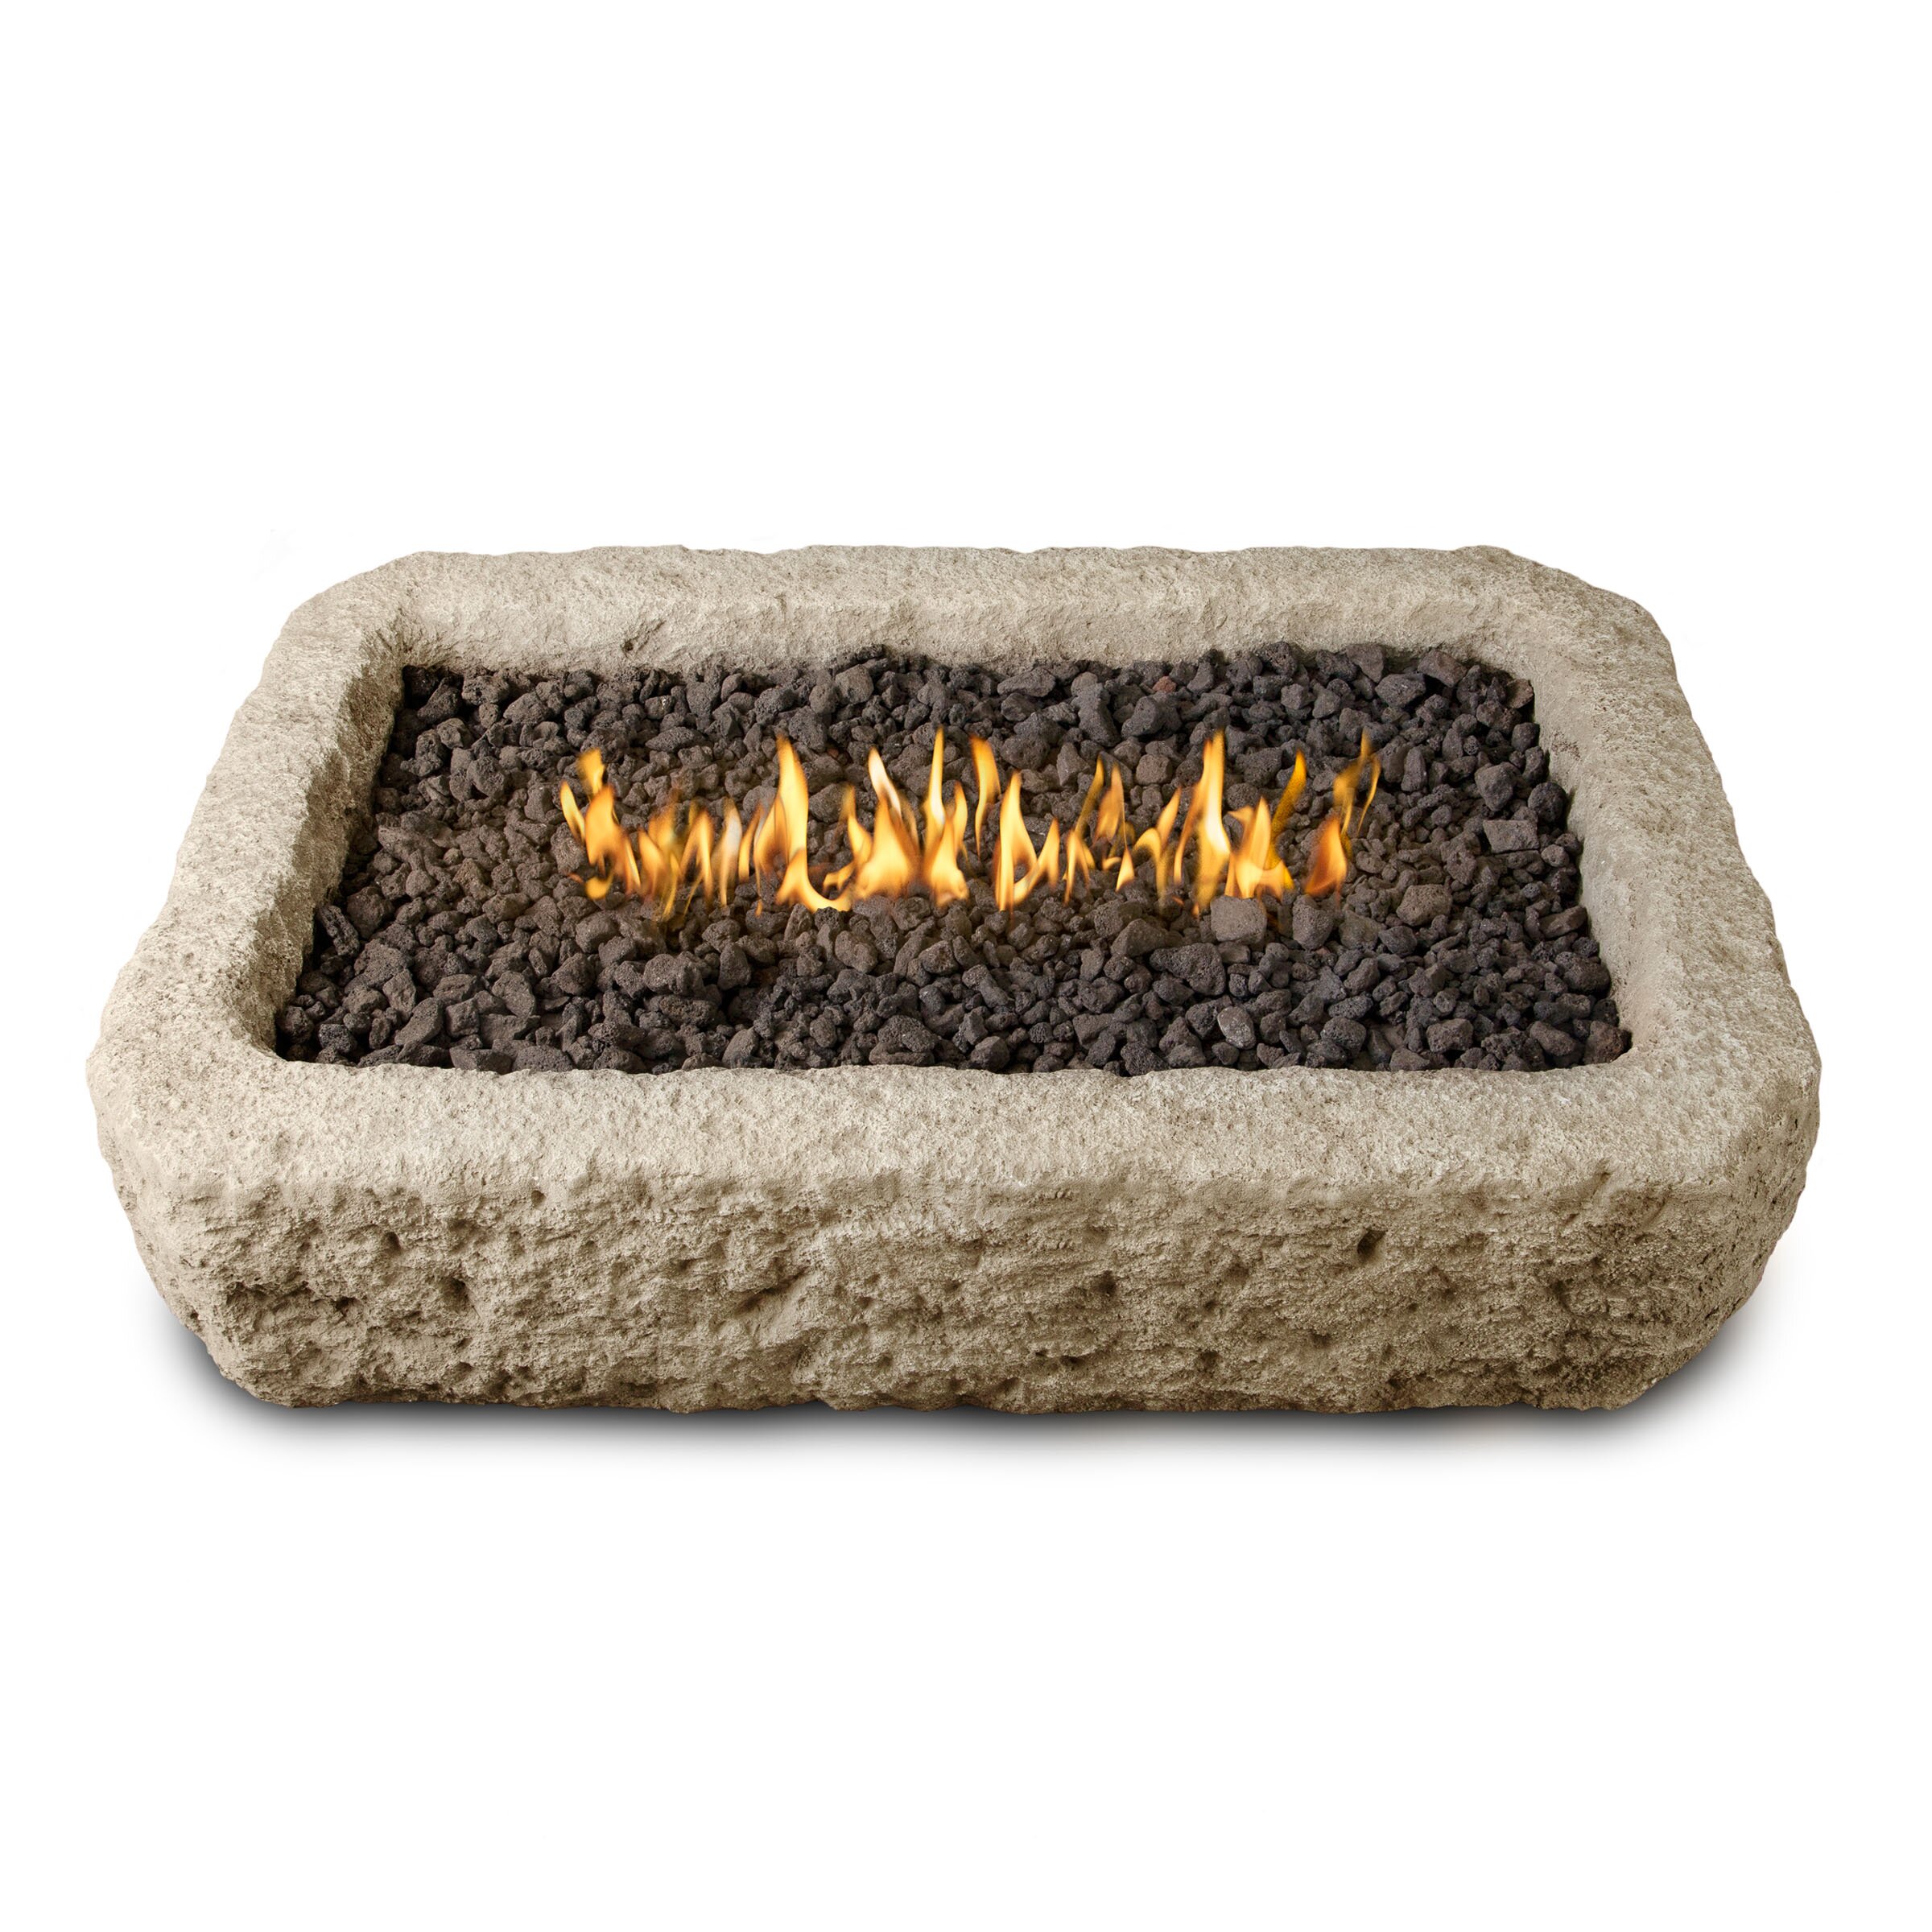 Real Flame Limestone Propane Fire Pit & Reviews | Wayfair